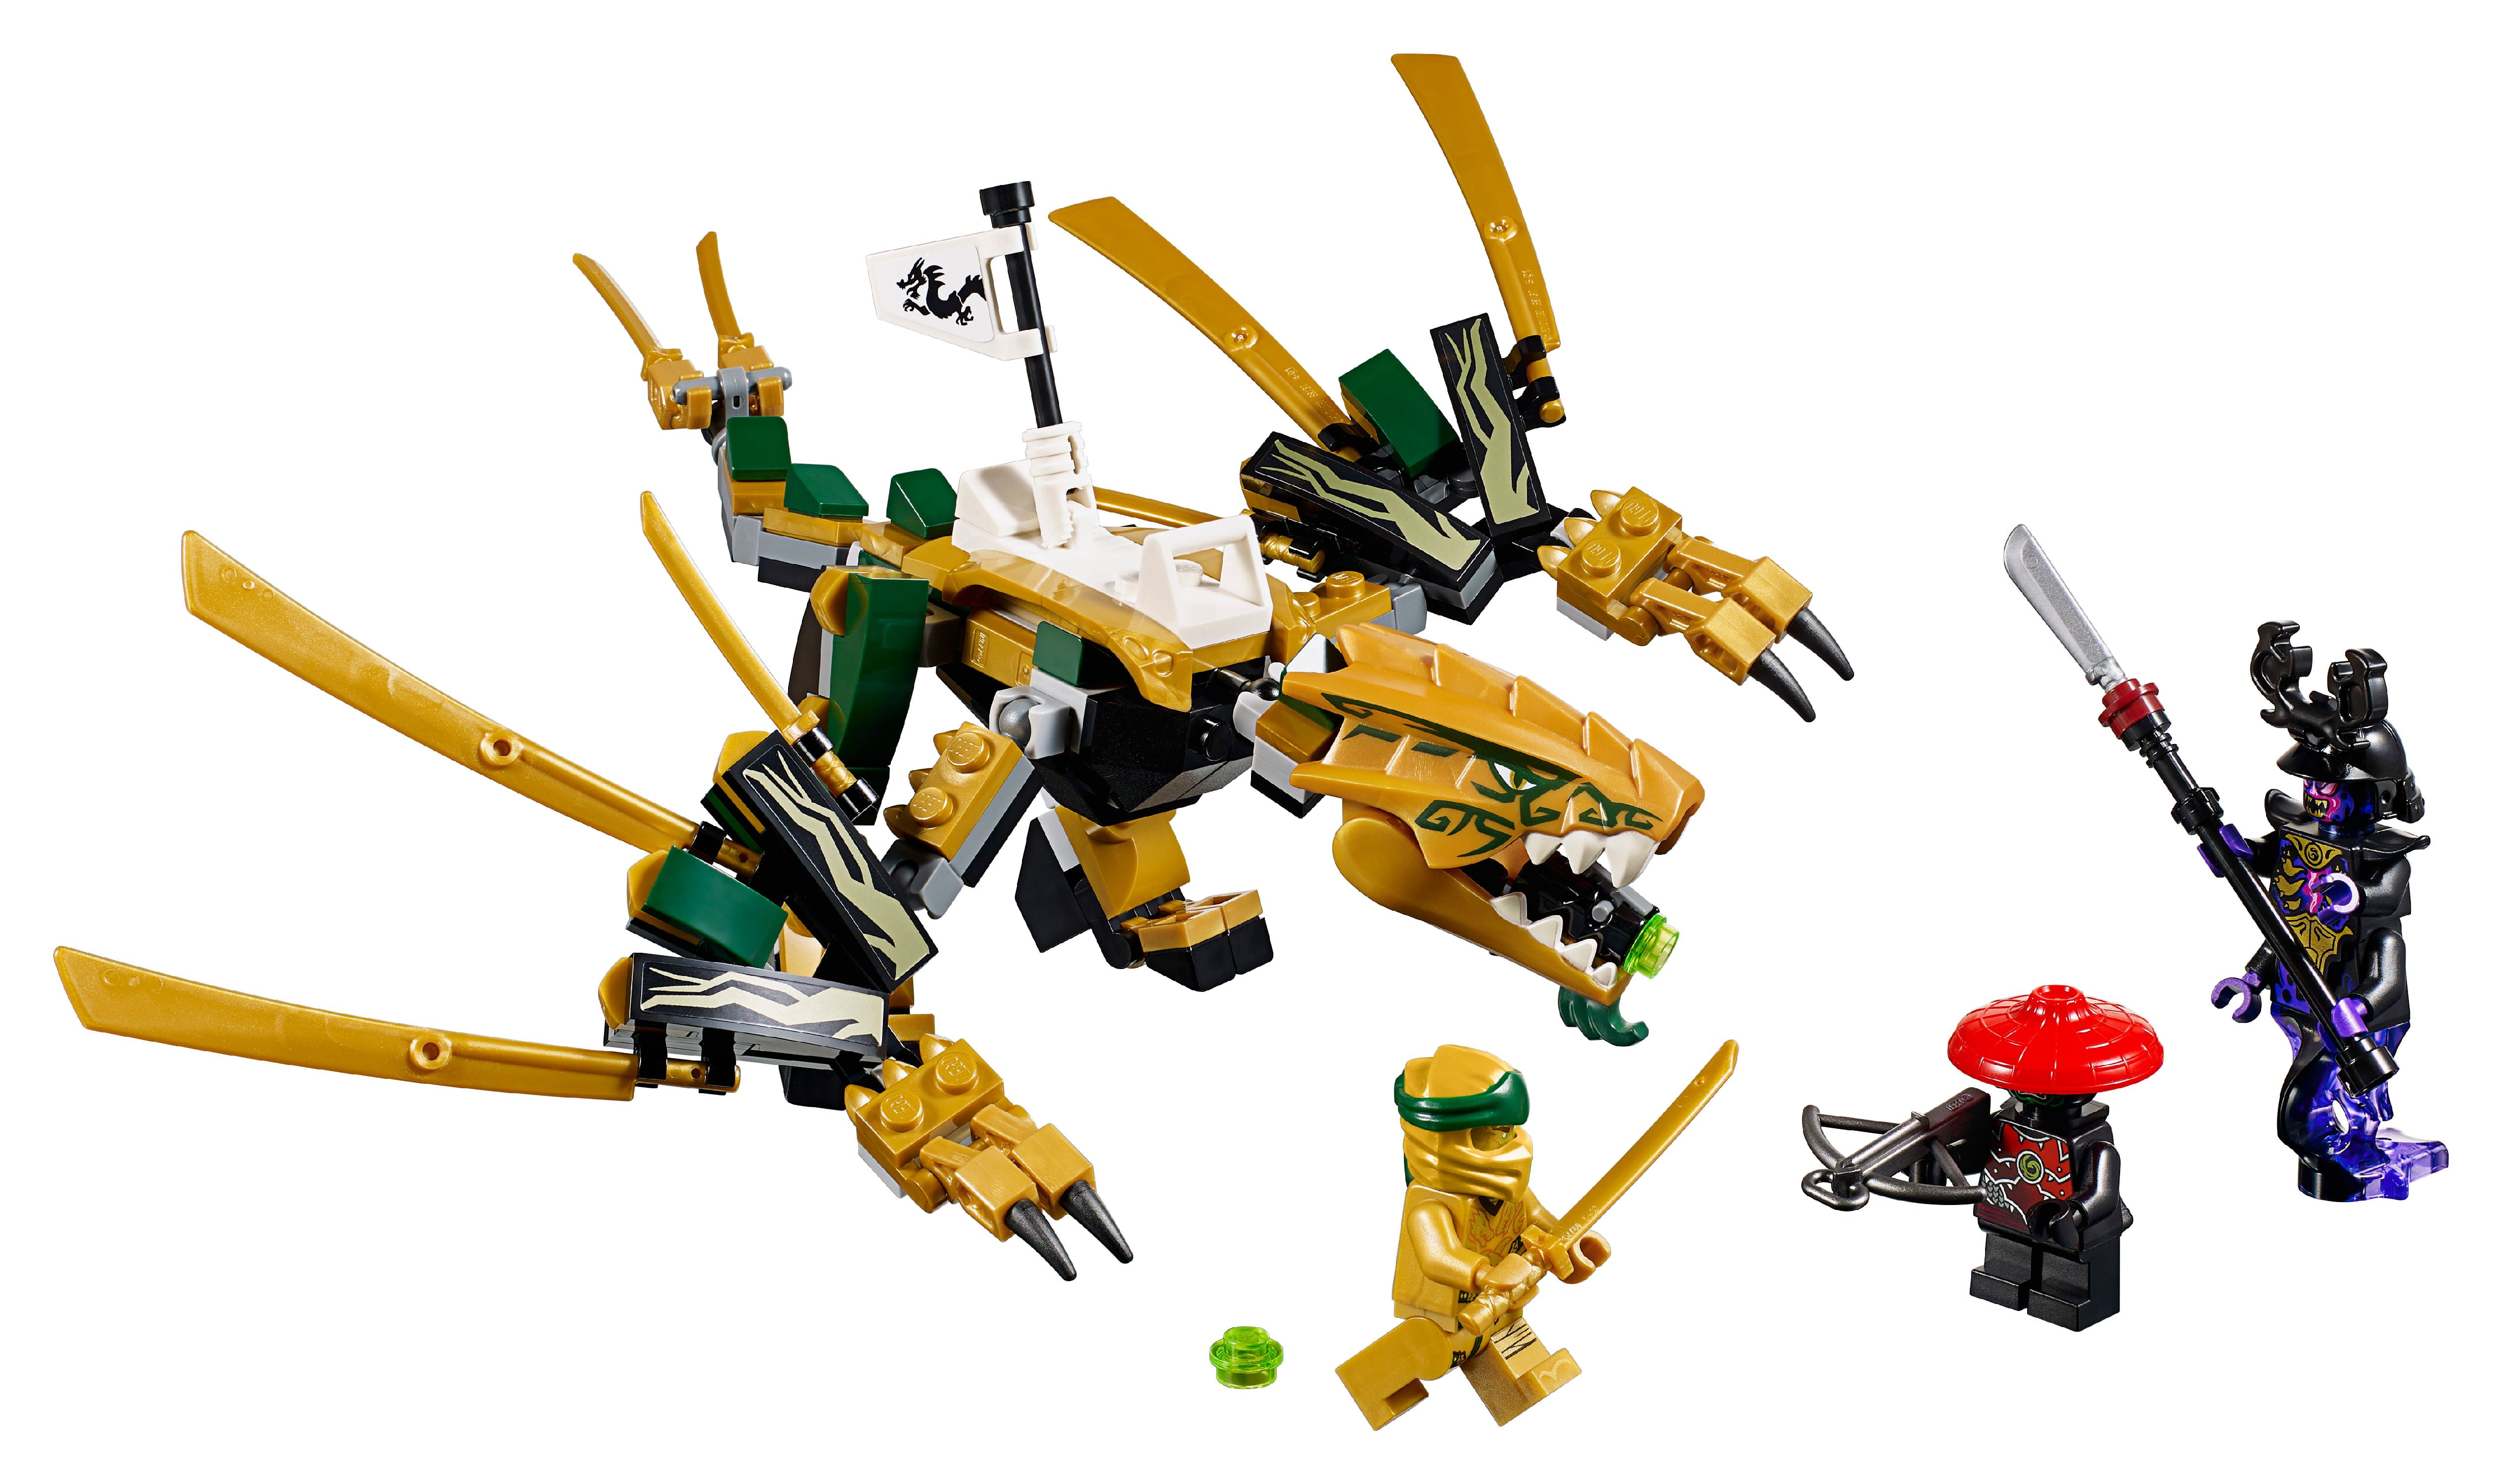 vlinder Klooster verbergen LEGO Ninjago The Golden Dragon Building Set 70666 (171 Pieces) - Walmart.com